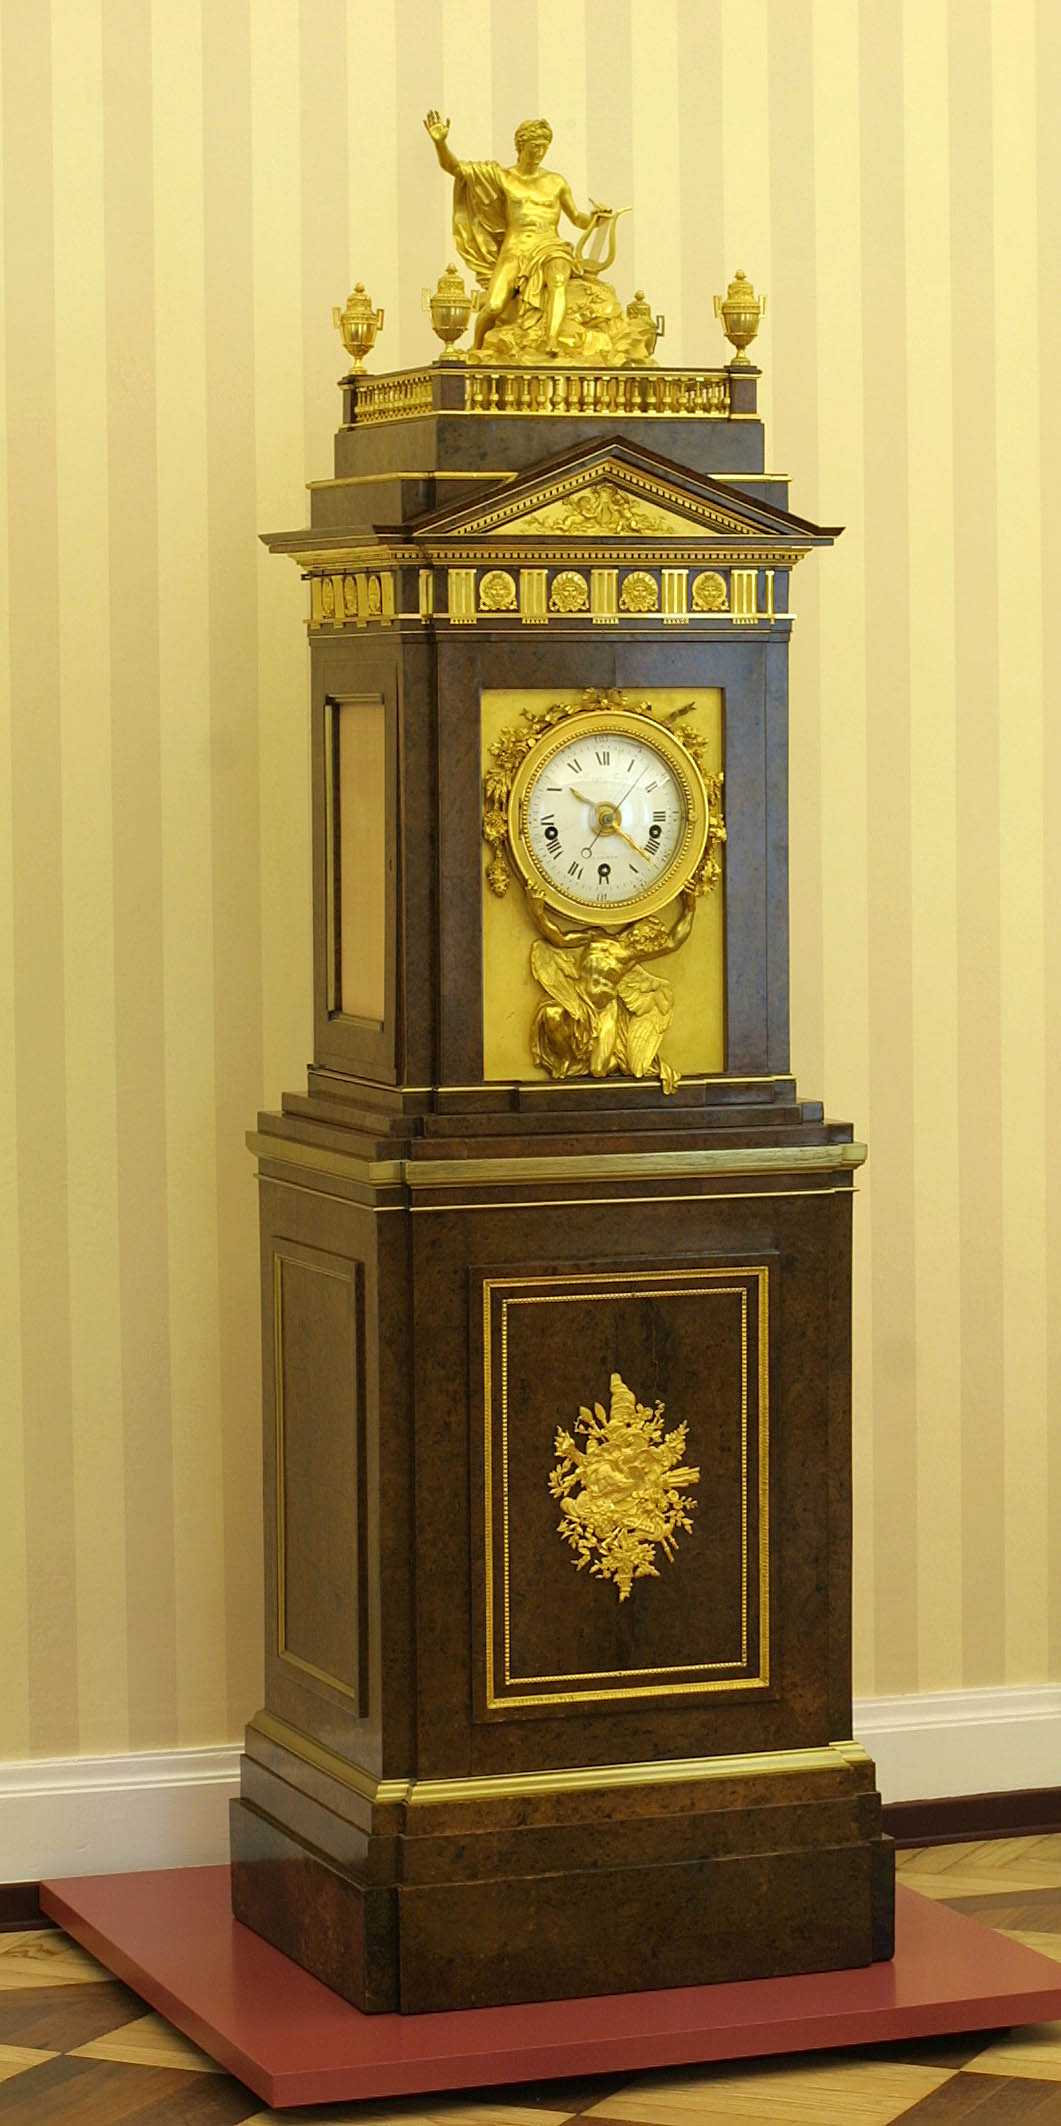 Appollo-Uhr (Roentgen-Museum CC BY-NC-SA)